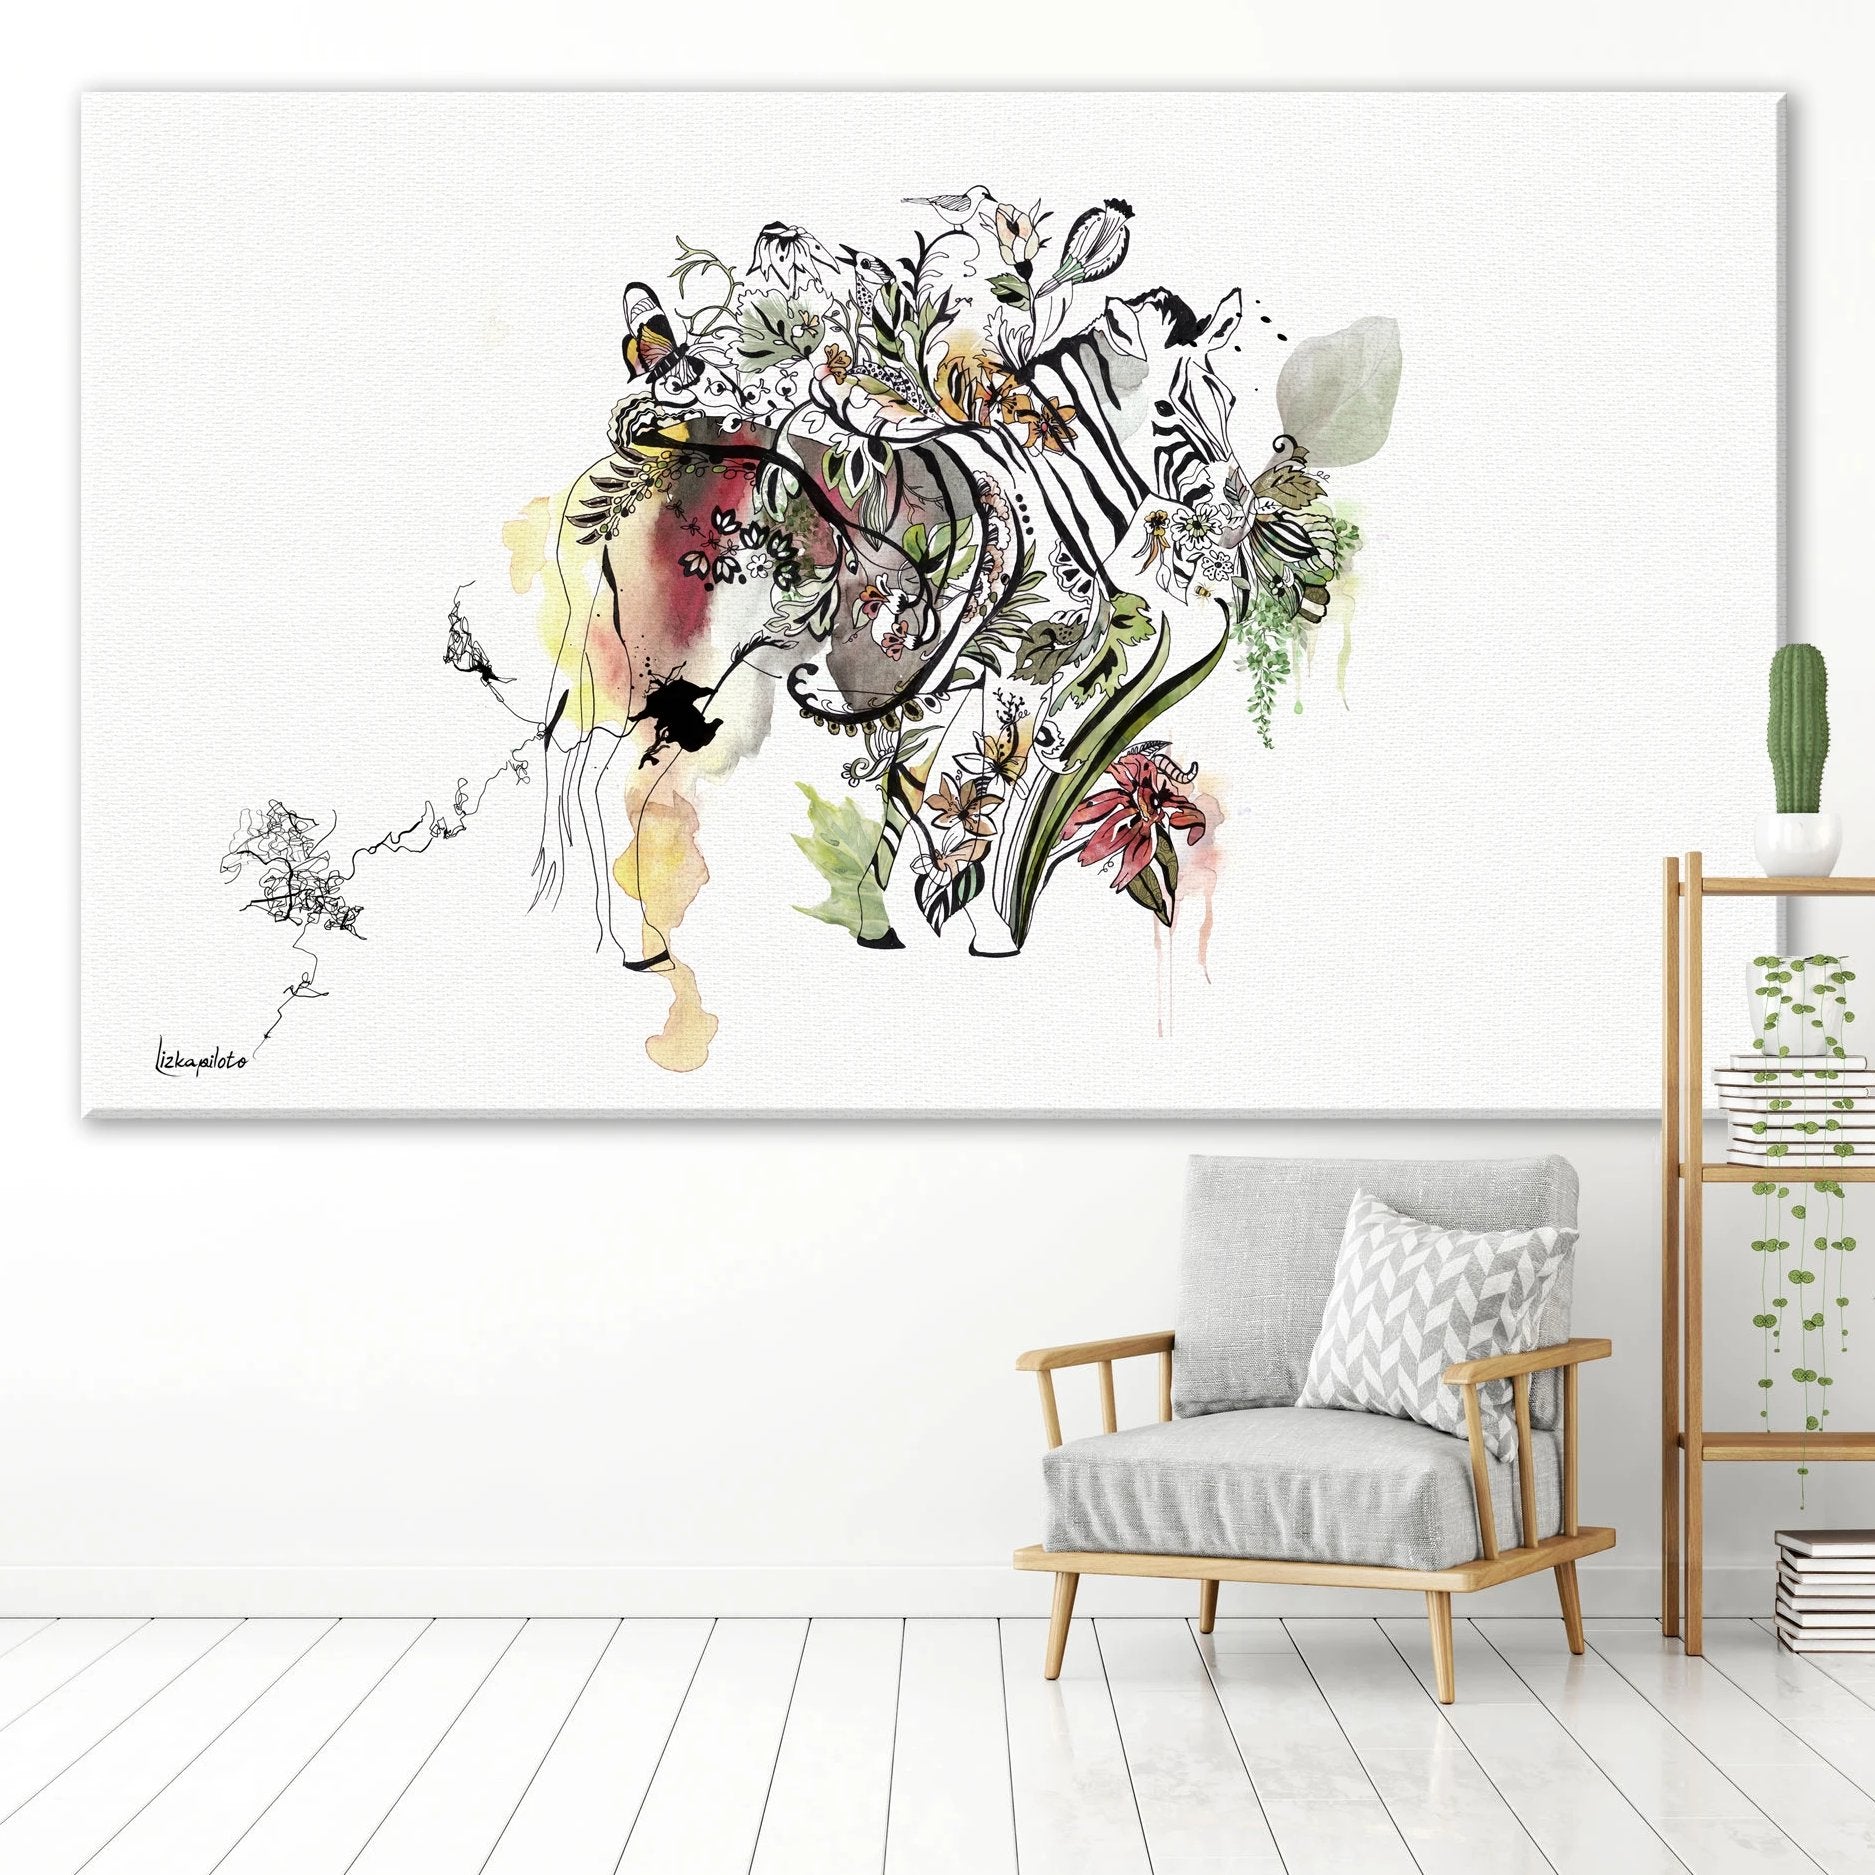 Zebra - Large Canvas - Liz Kapiloto Art & Design